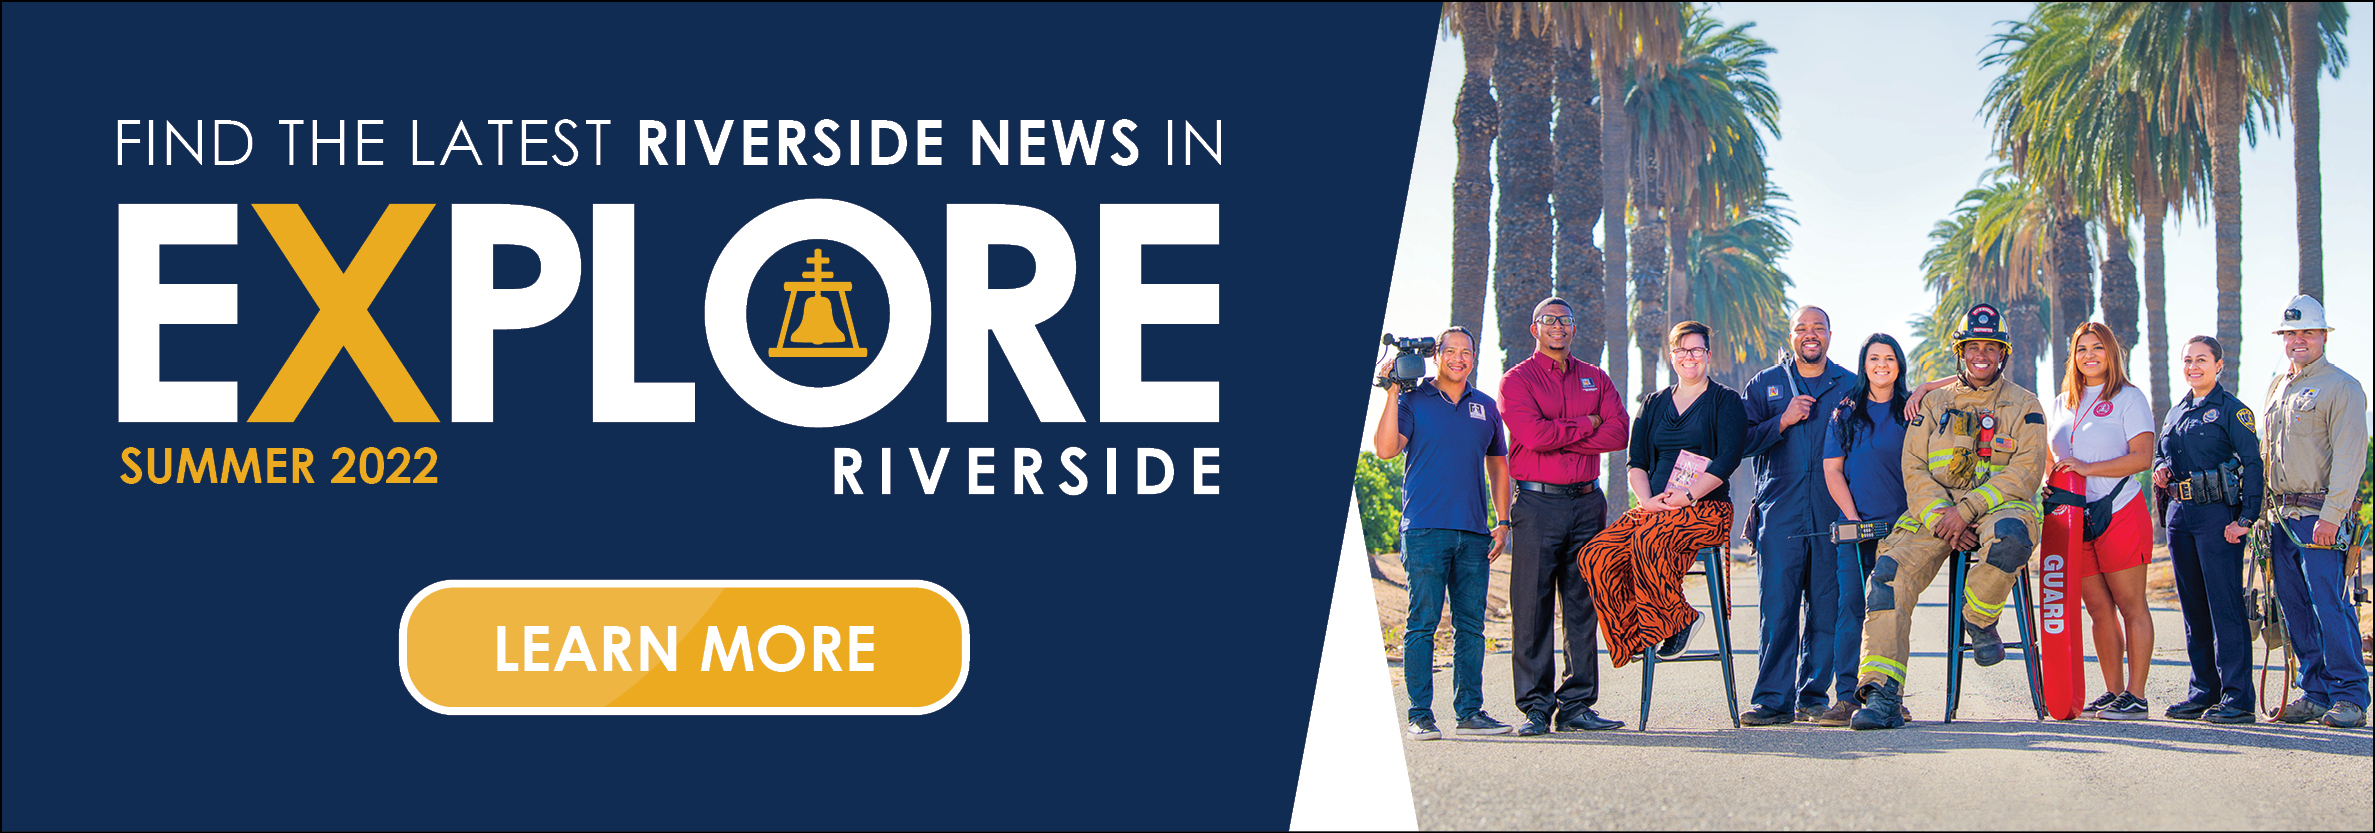 Explore Riverside 2022